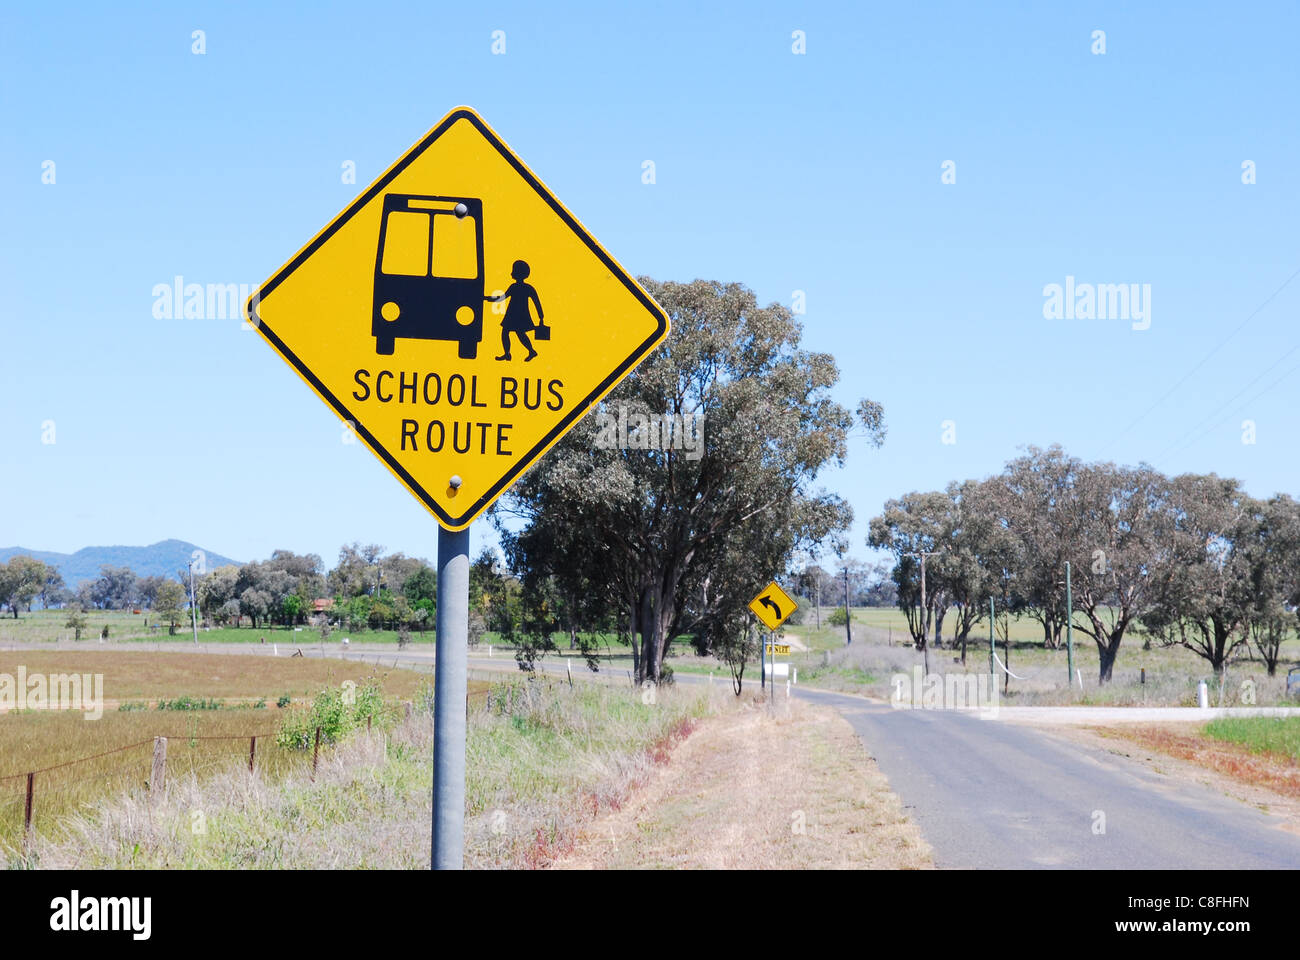 School bus sign on rural road Banque D'Images